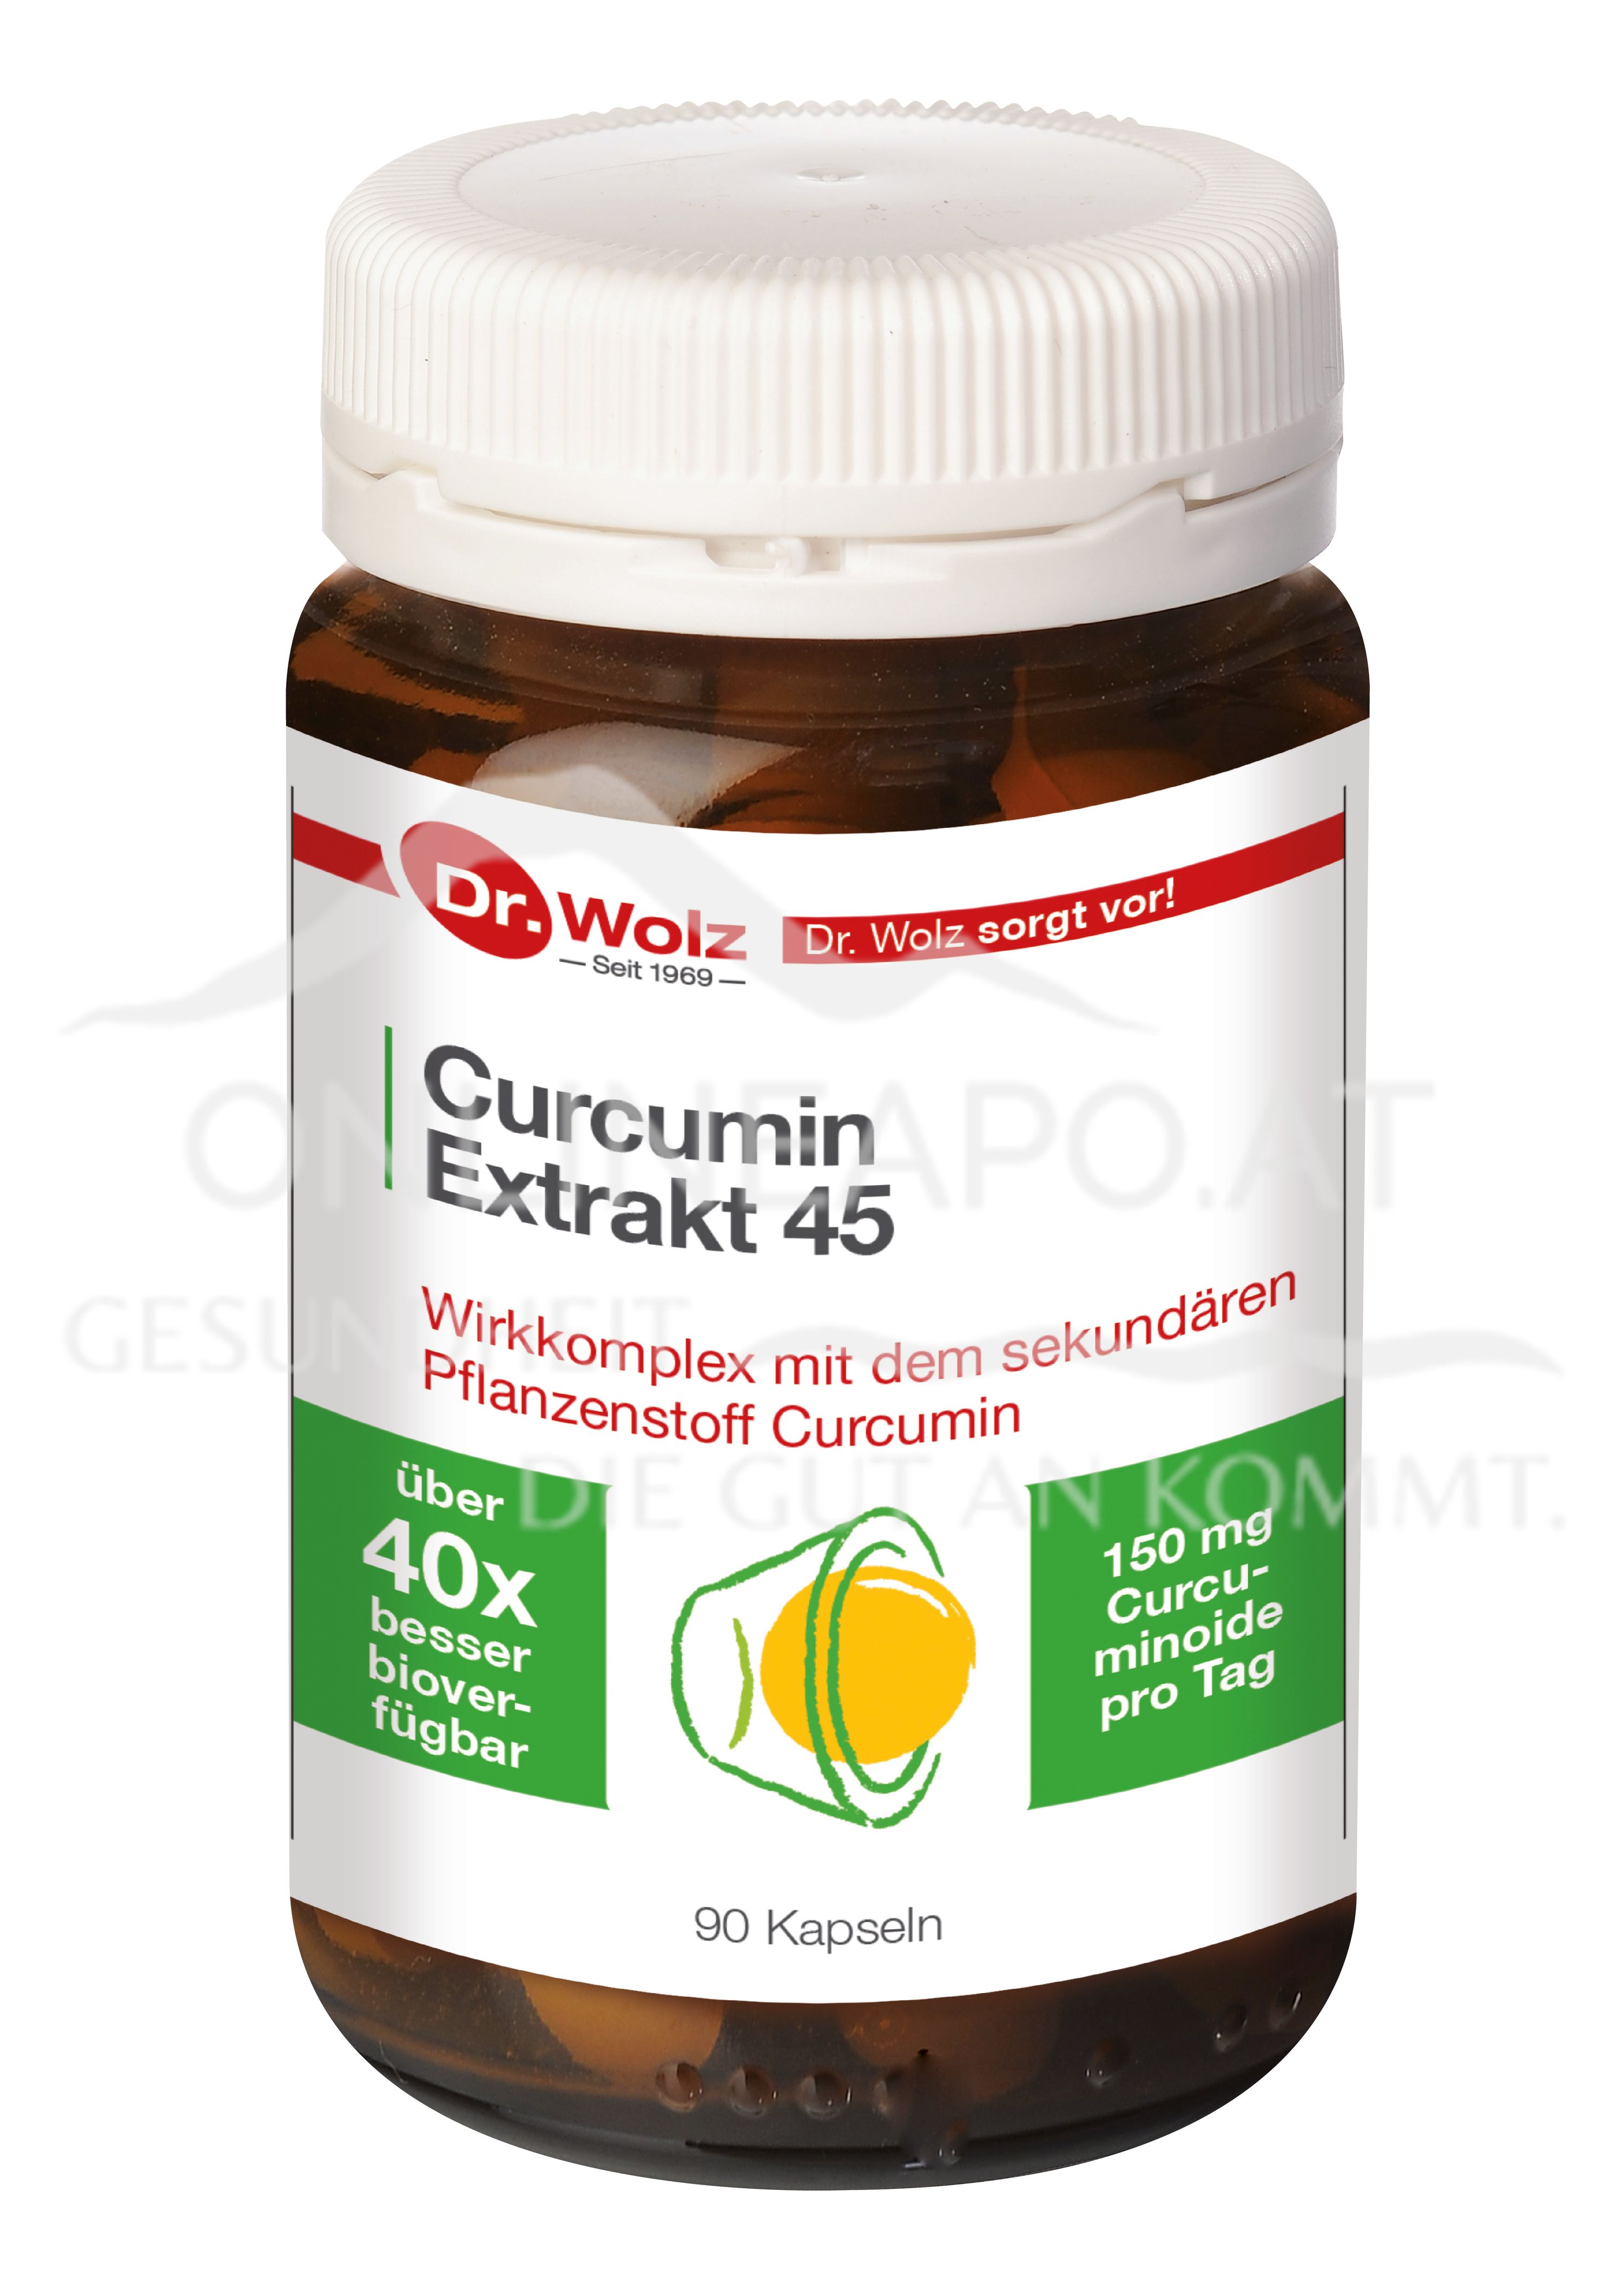 Dr. Wolz Curcumin Extrakt 45 Kapseln